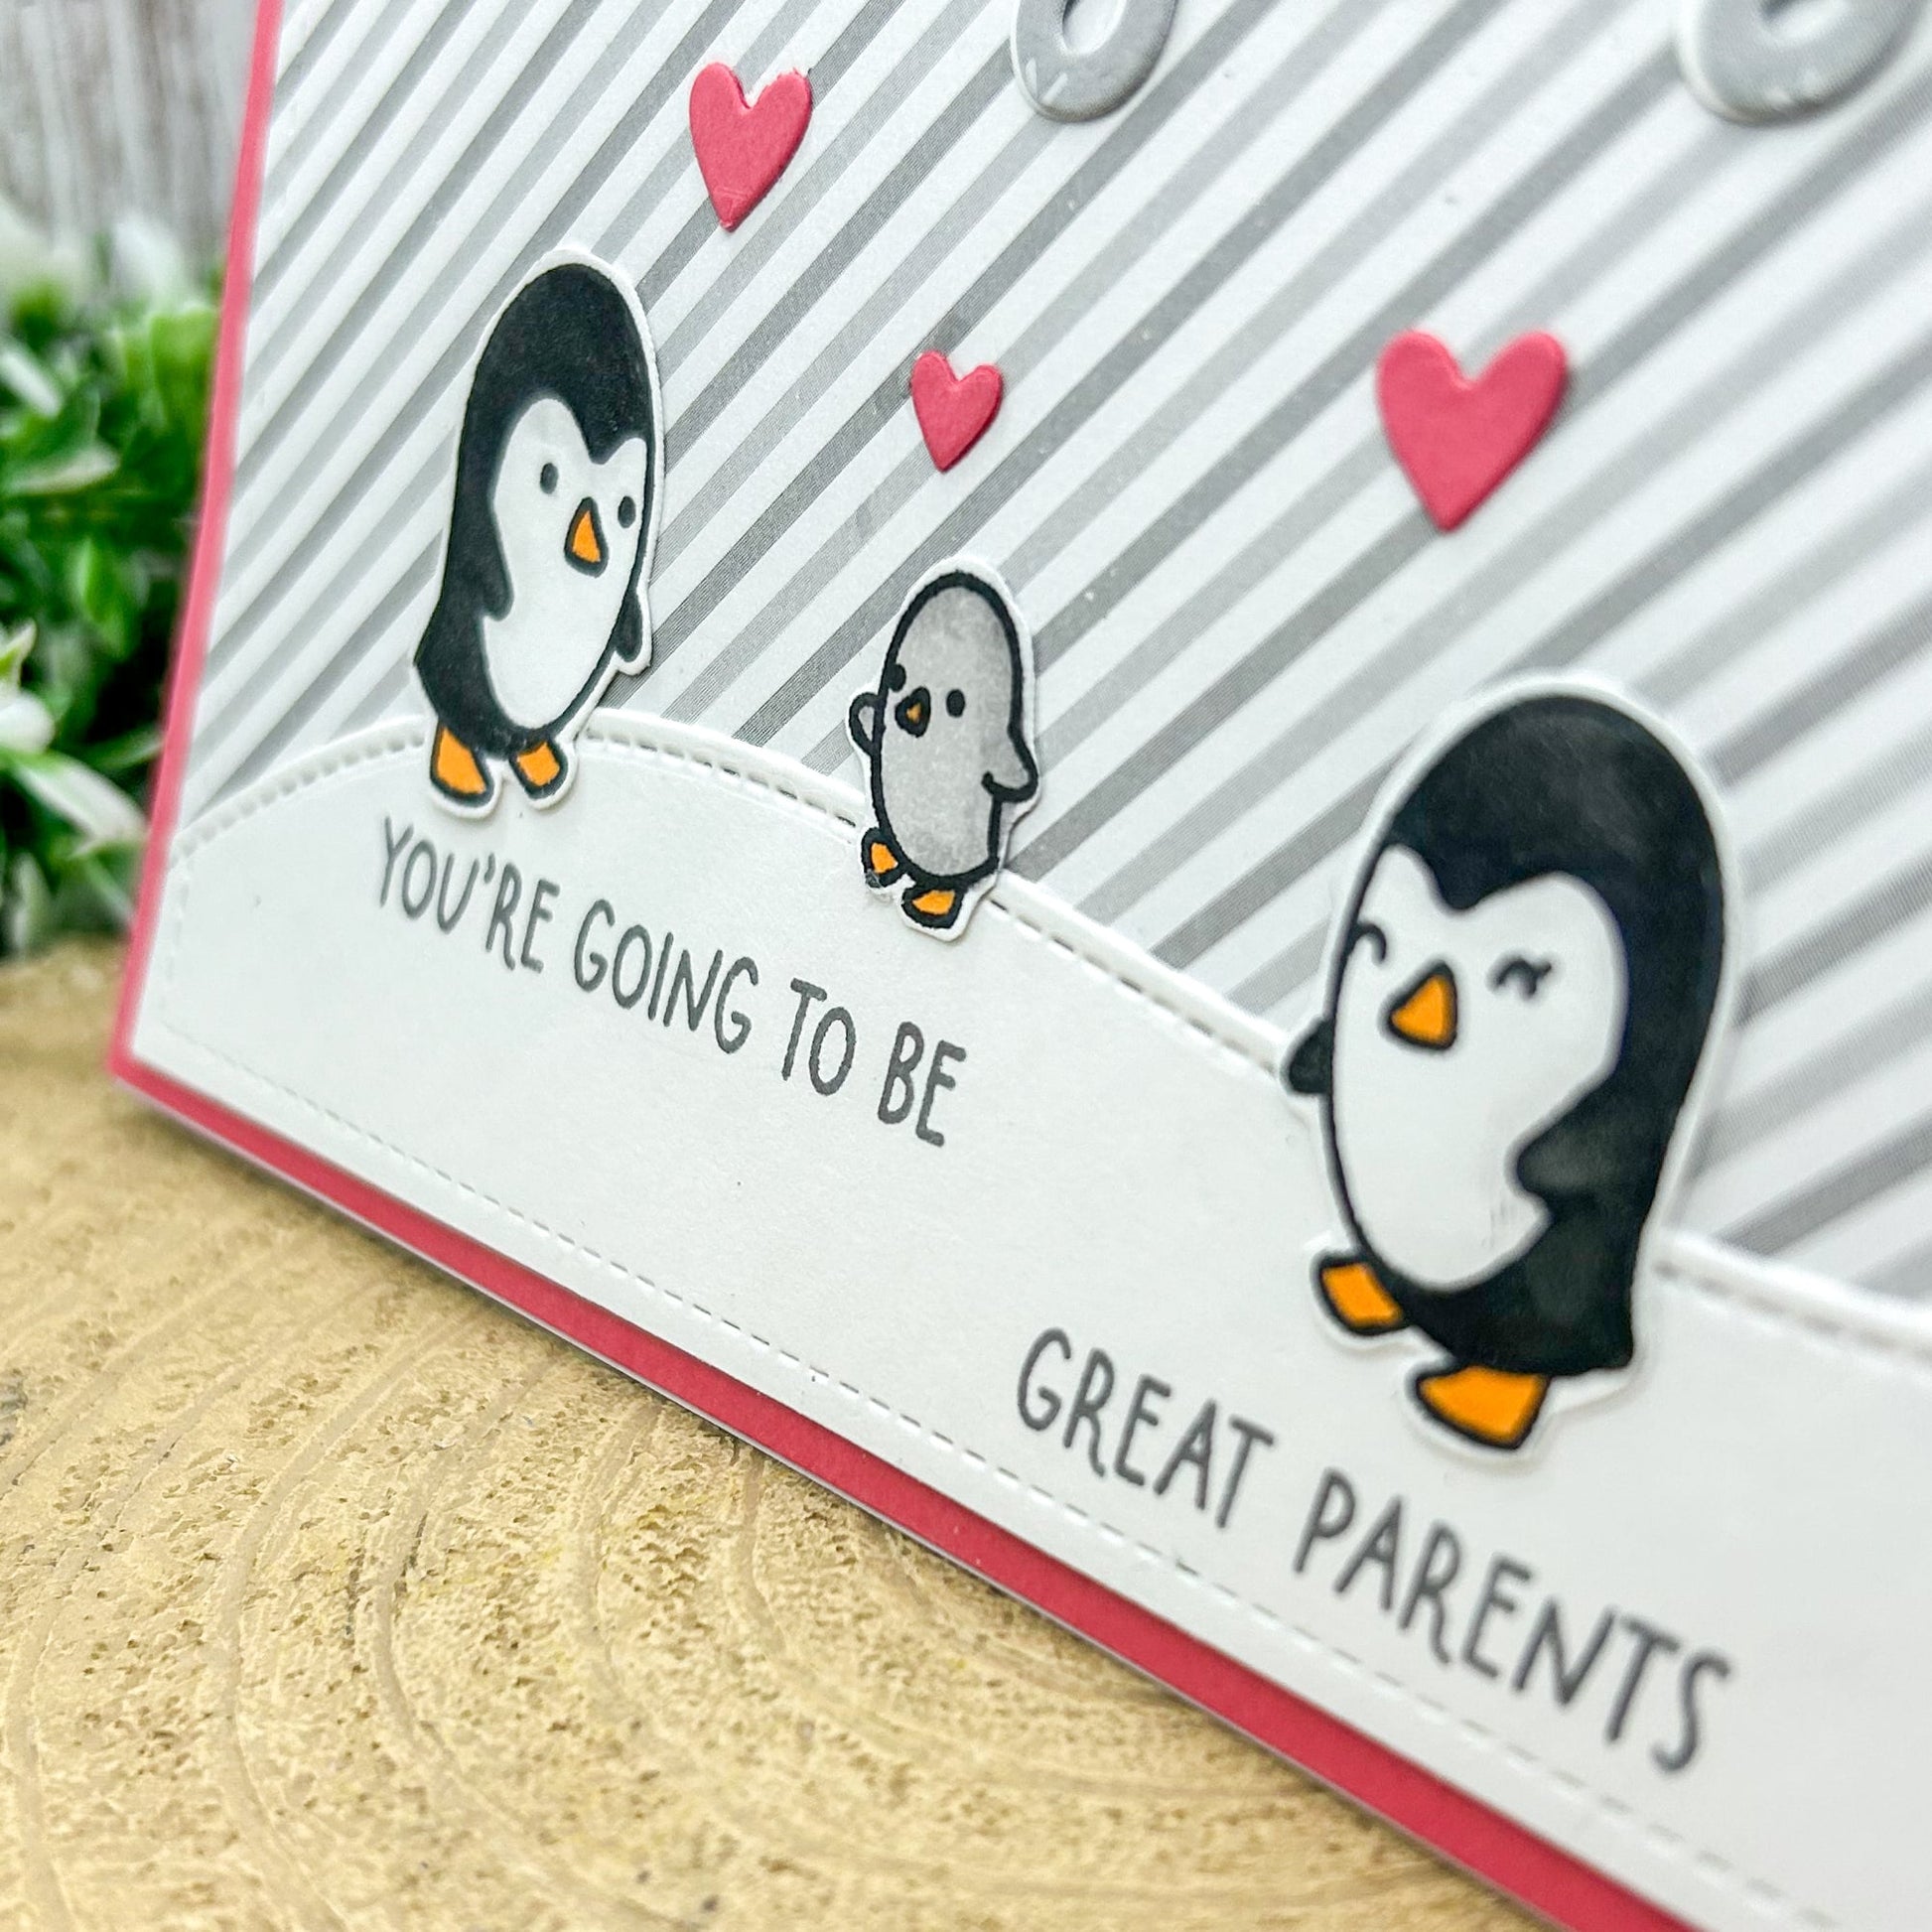 Congrats Great Parents Handmade New Baby Card-2